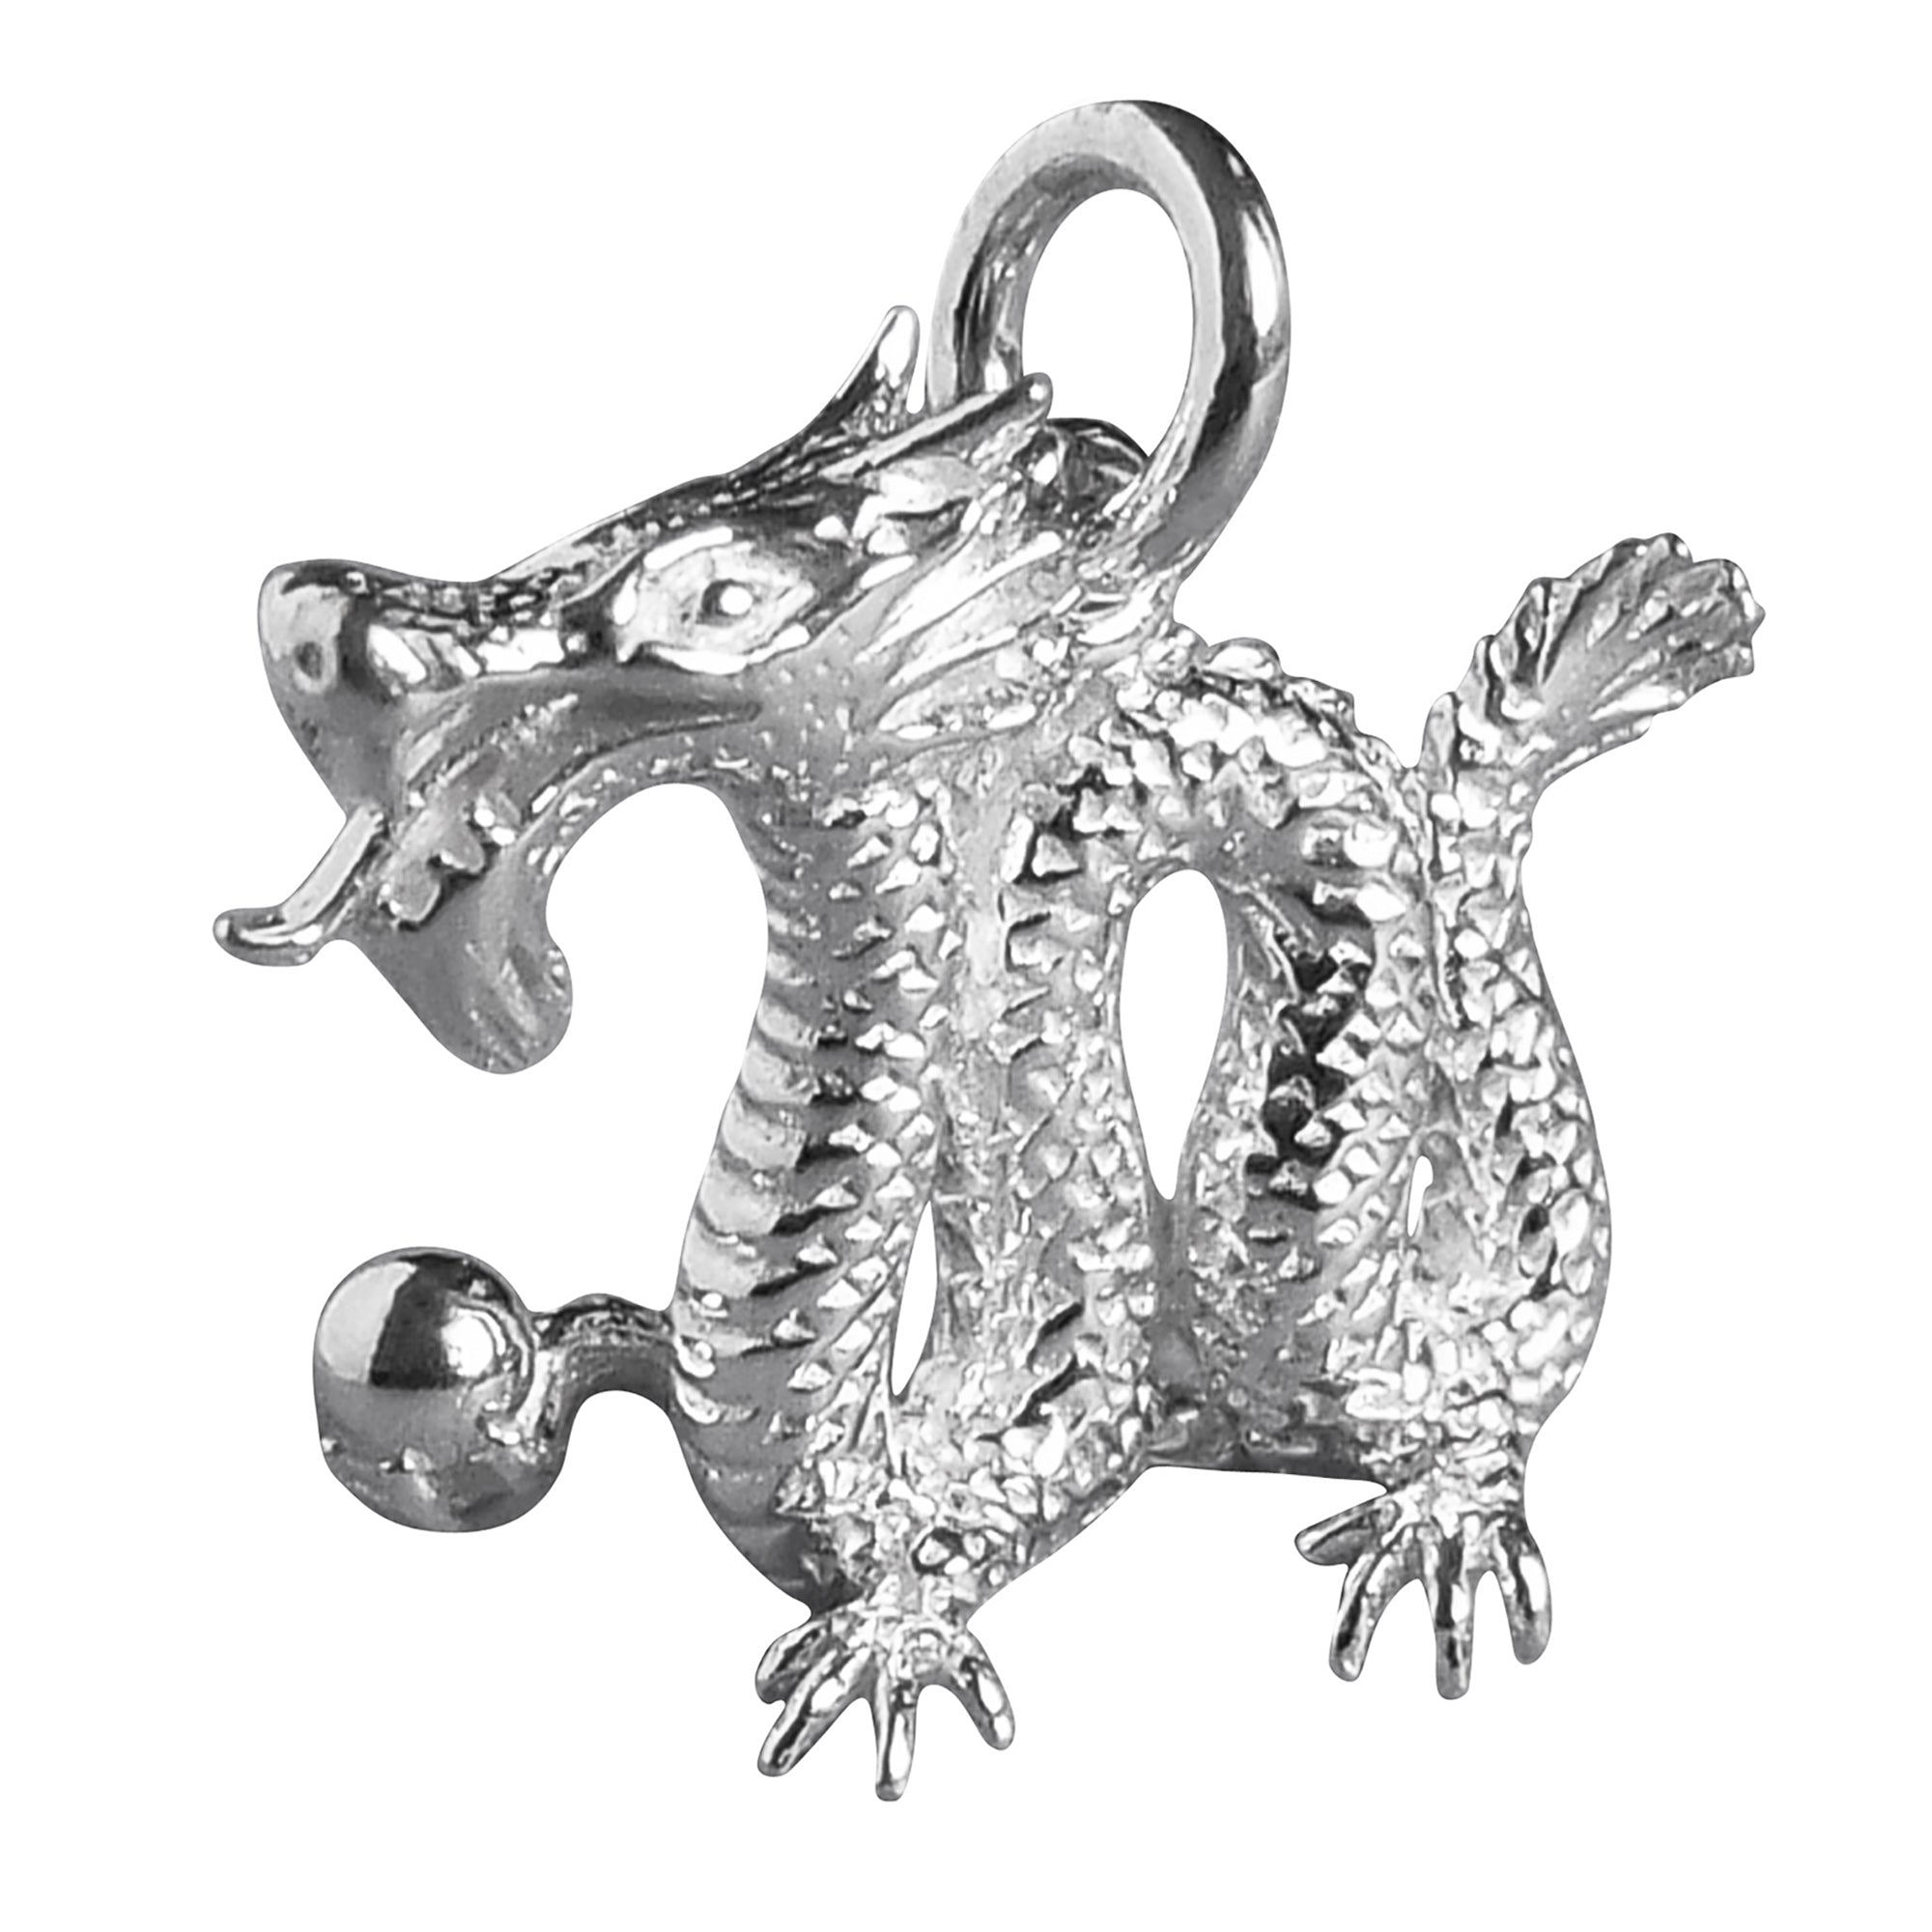 WYSIWYG 4pcs 37x32mm Chinese Dragon Charms For Jewelry Making Round Dragon  Charm Round Chinese Dragon Charm